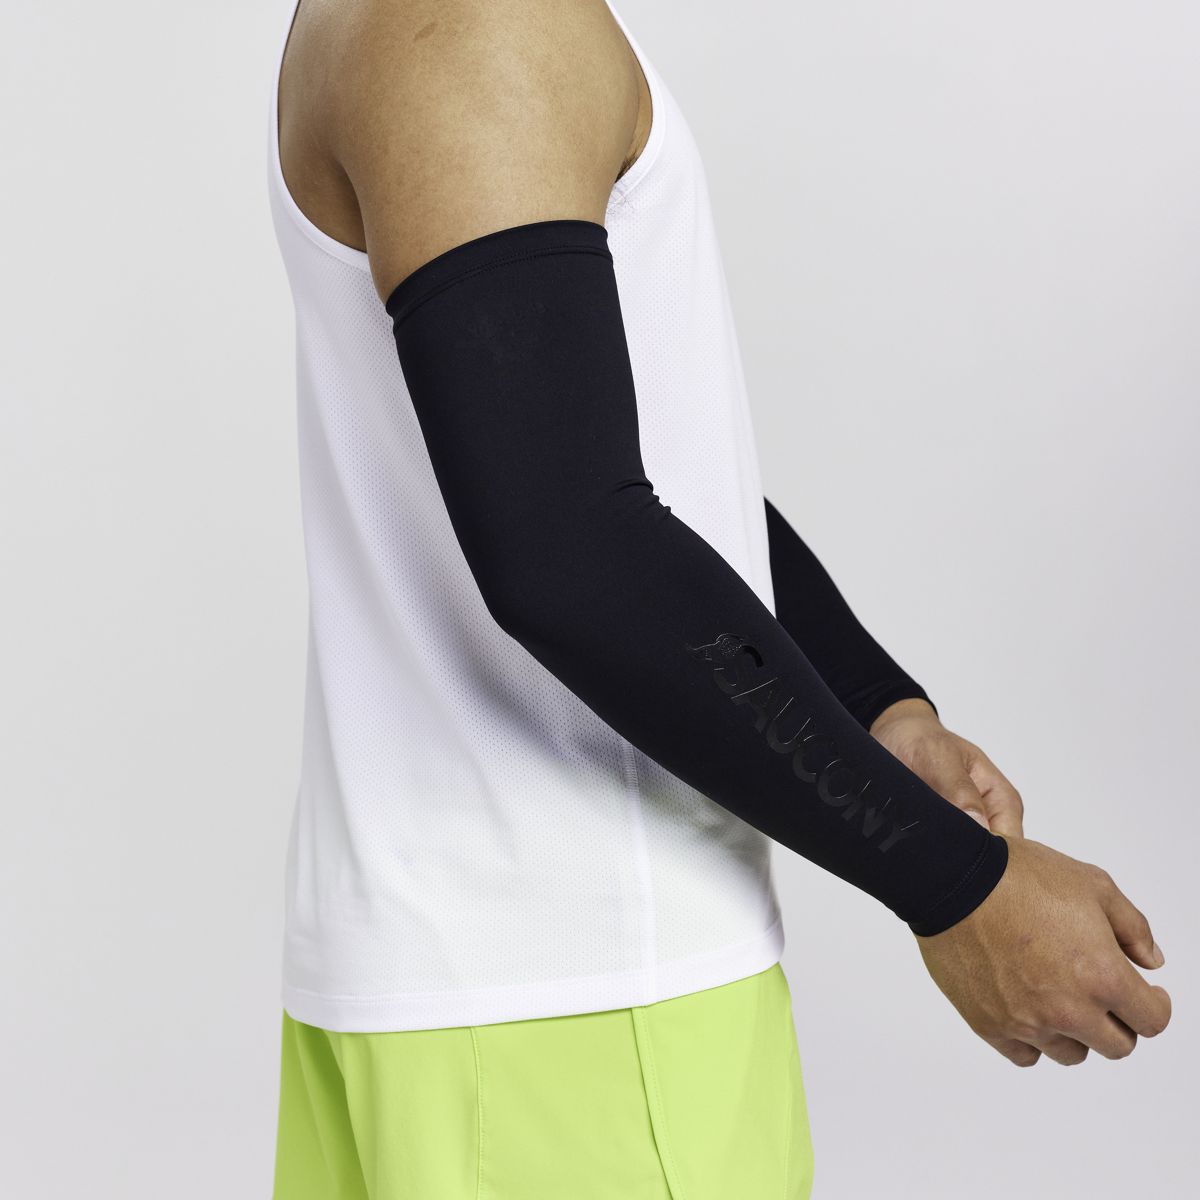 black arm sleeve basketball